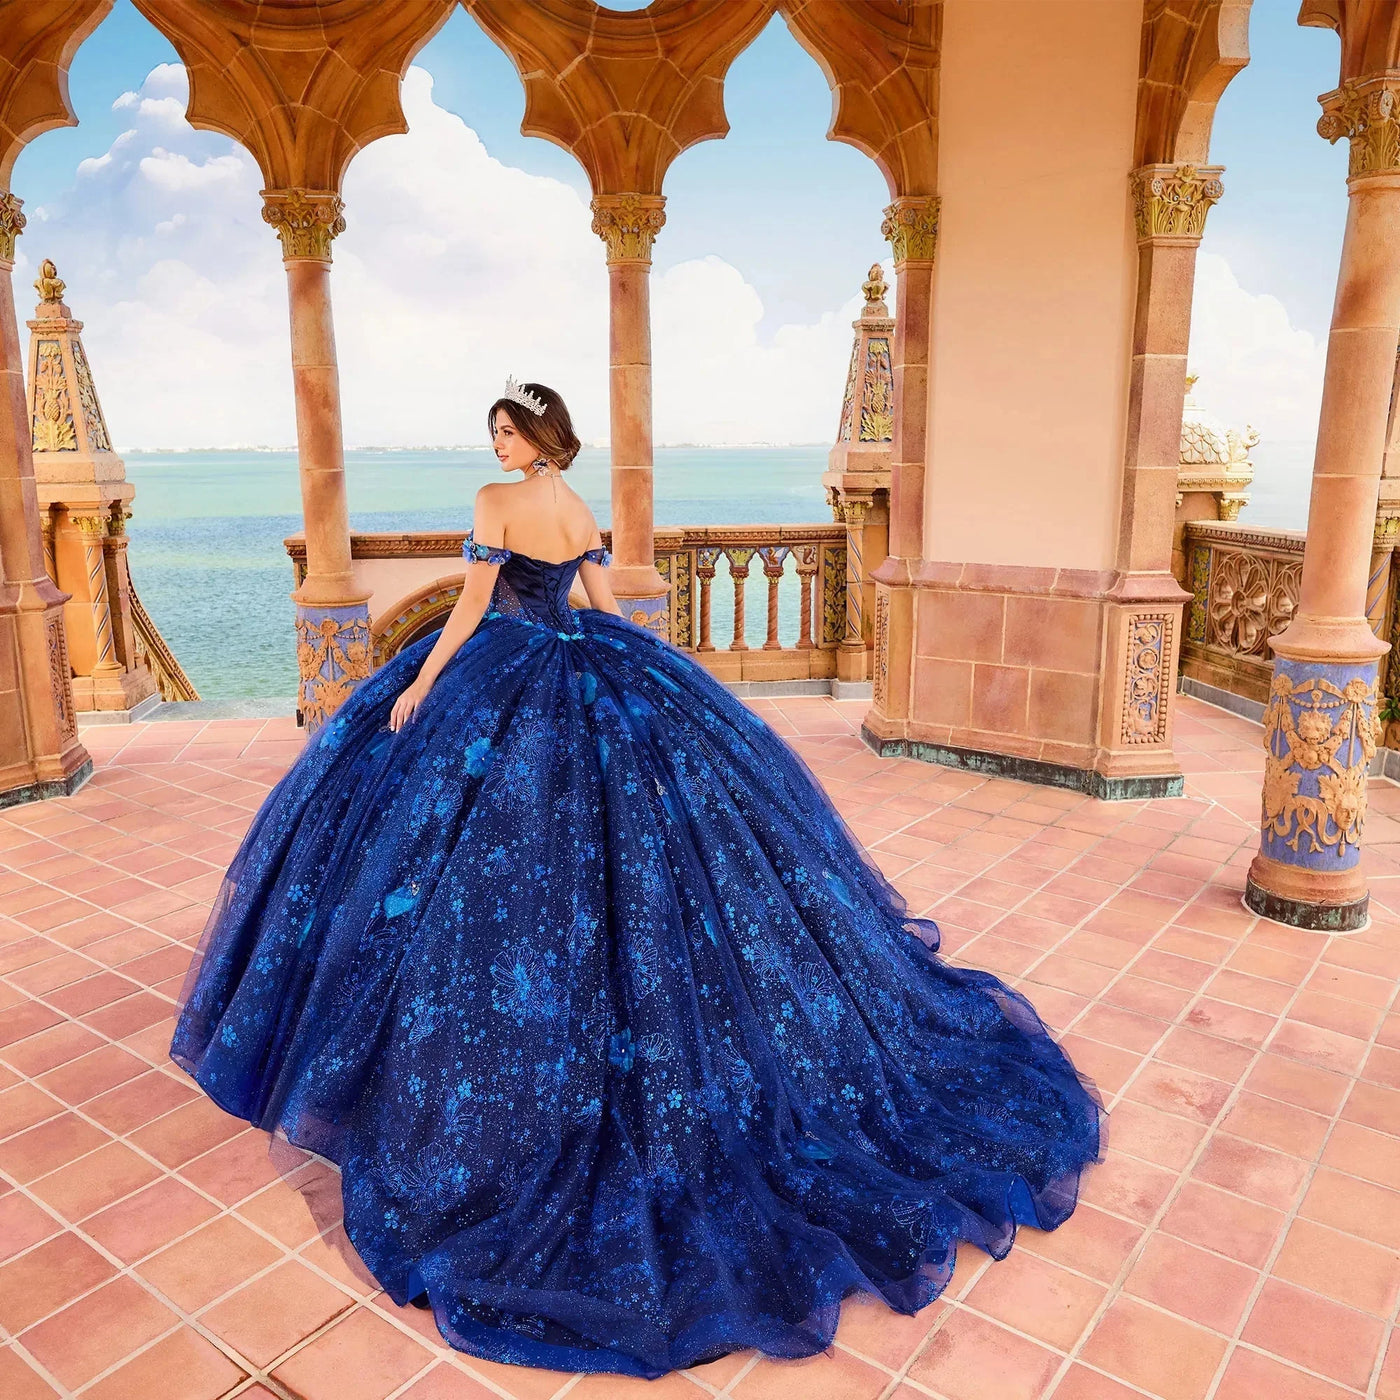 Princesa by Ariana Vara PR30159 - Corset Bodice Caplet Included Prom Dresses